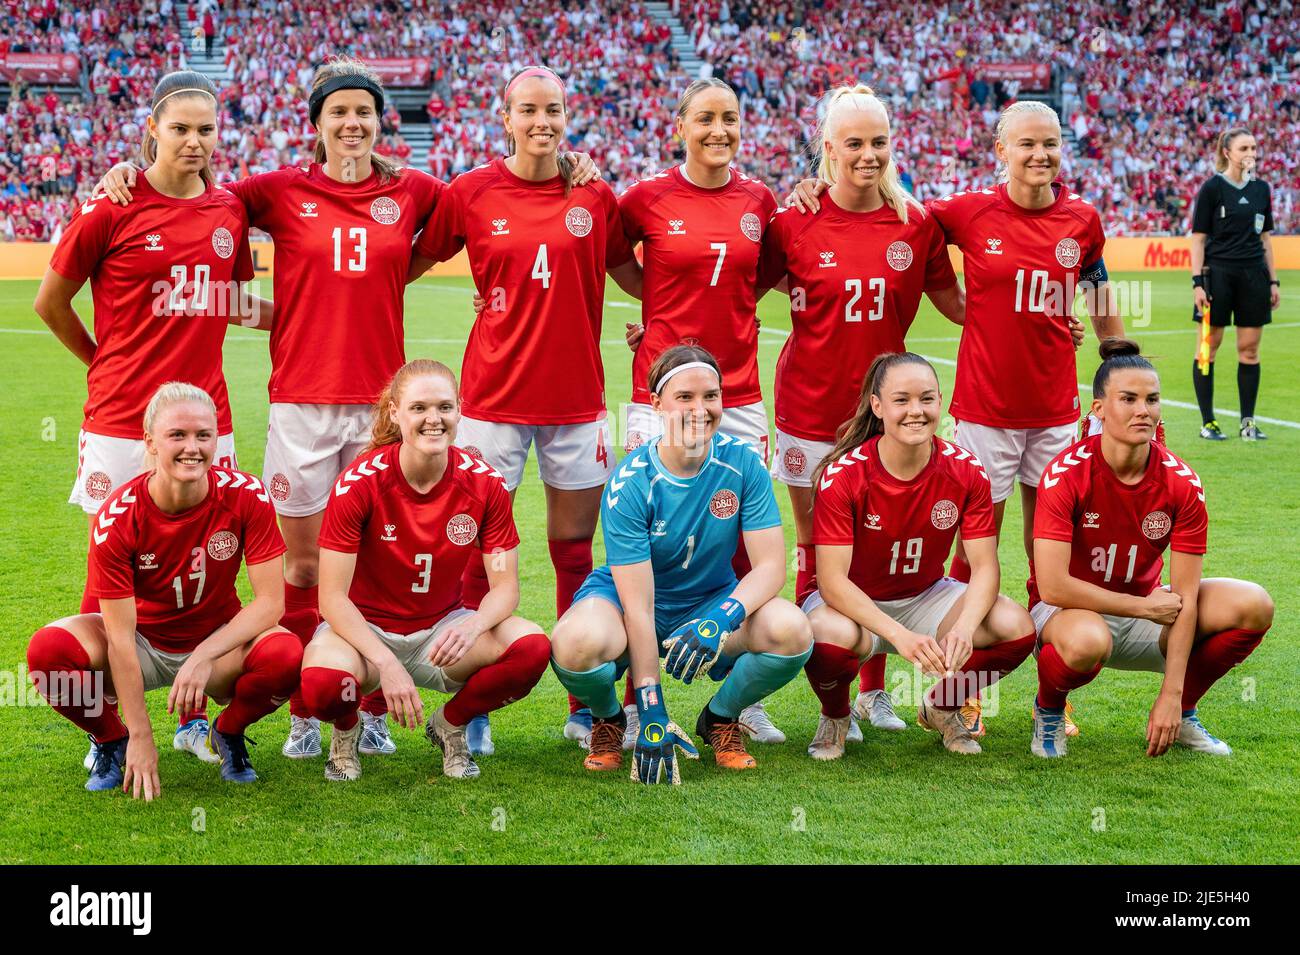 Denmark women vs brazil women hi-res stock photography and images - Alamy